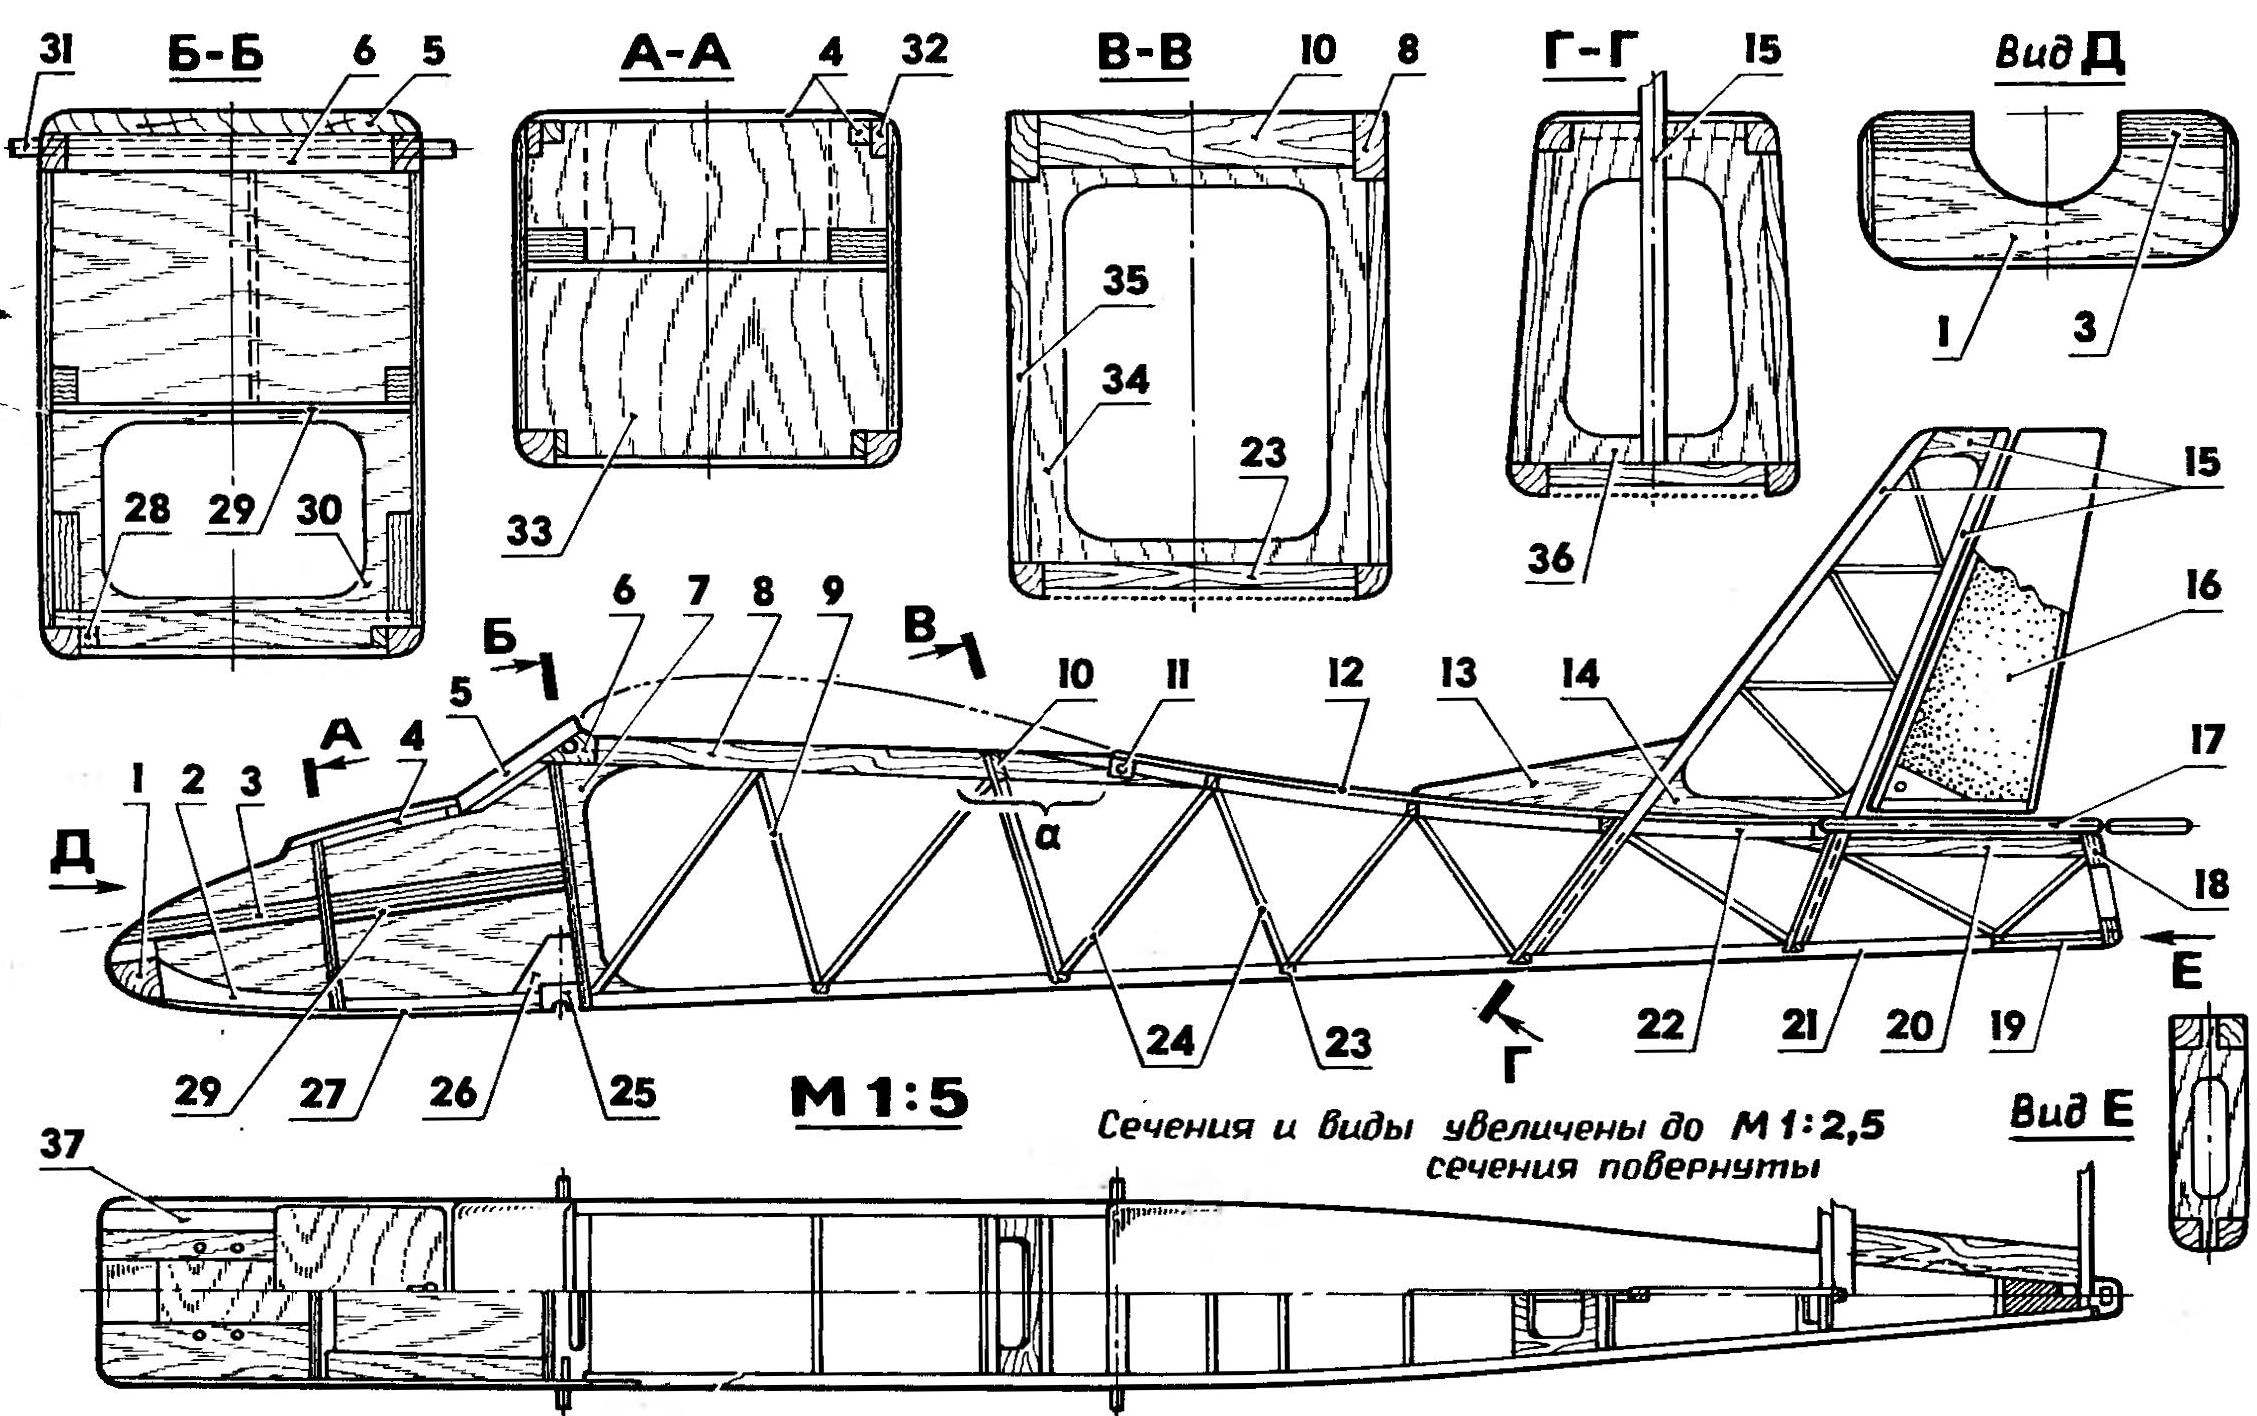 The fuselage